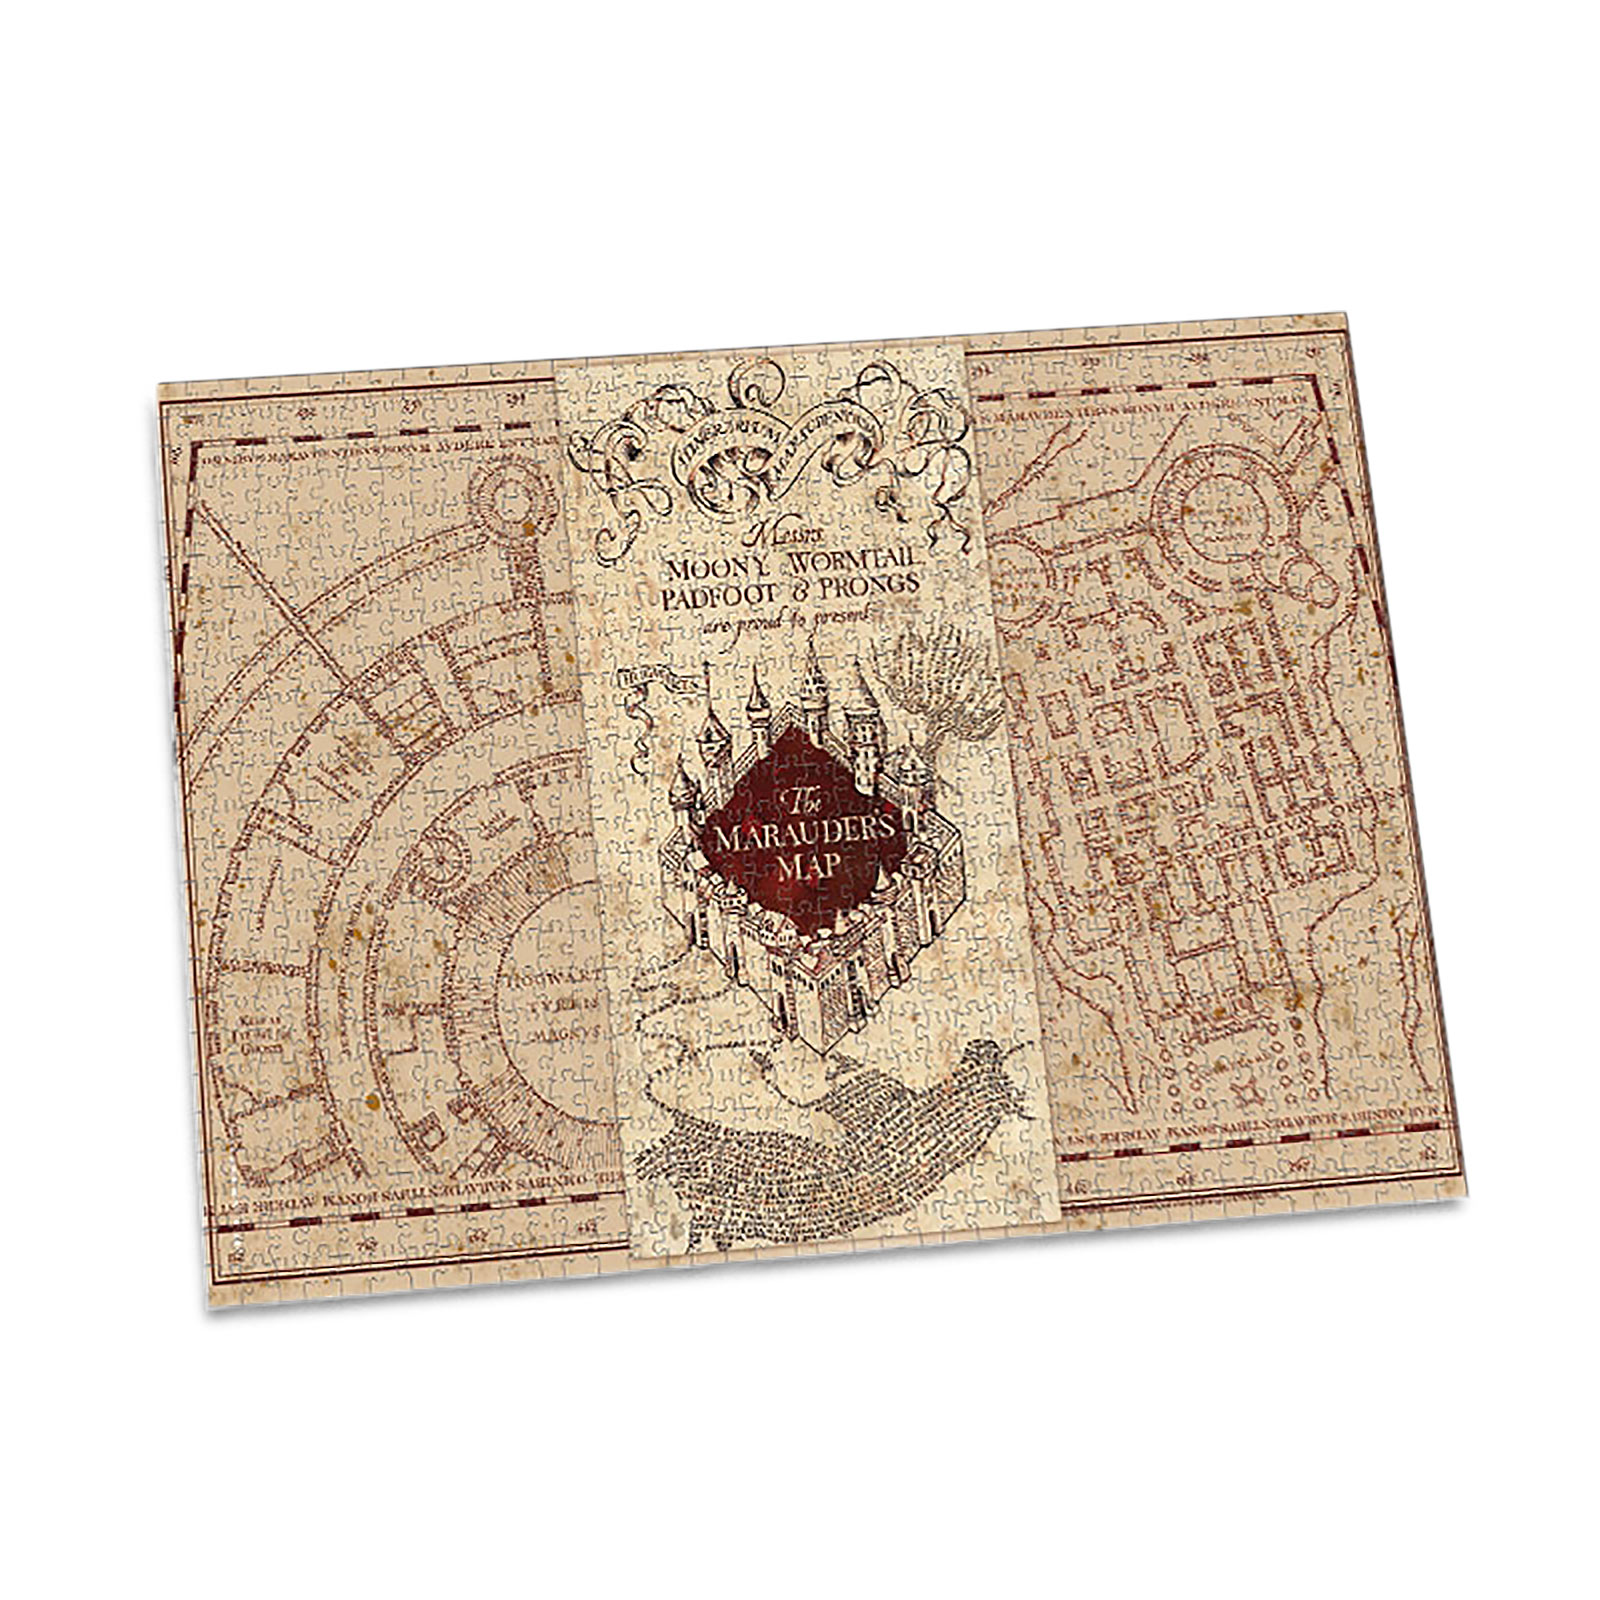 Harry Potter - Sluipers Kaart Puzzel 1000 Stukjes